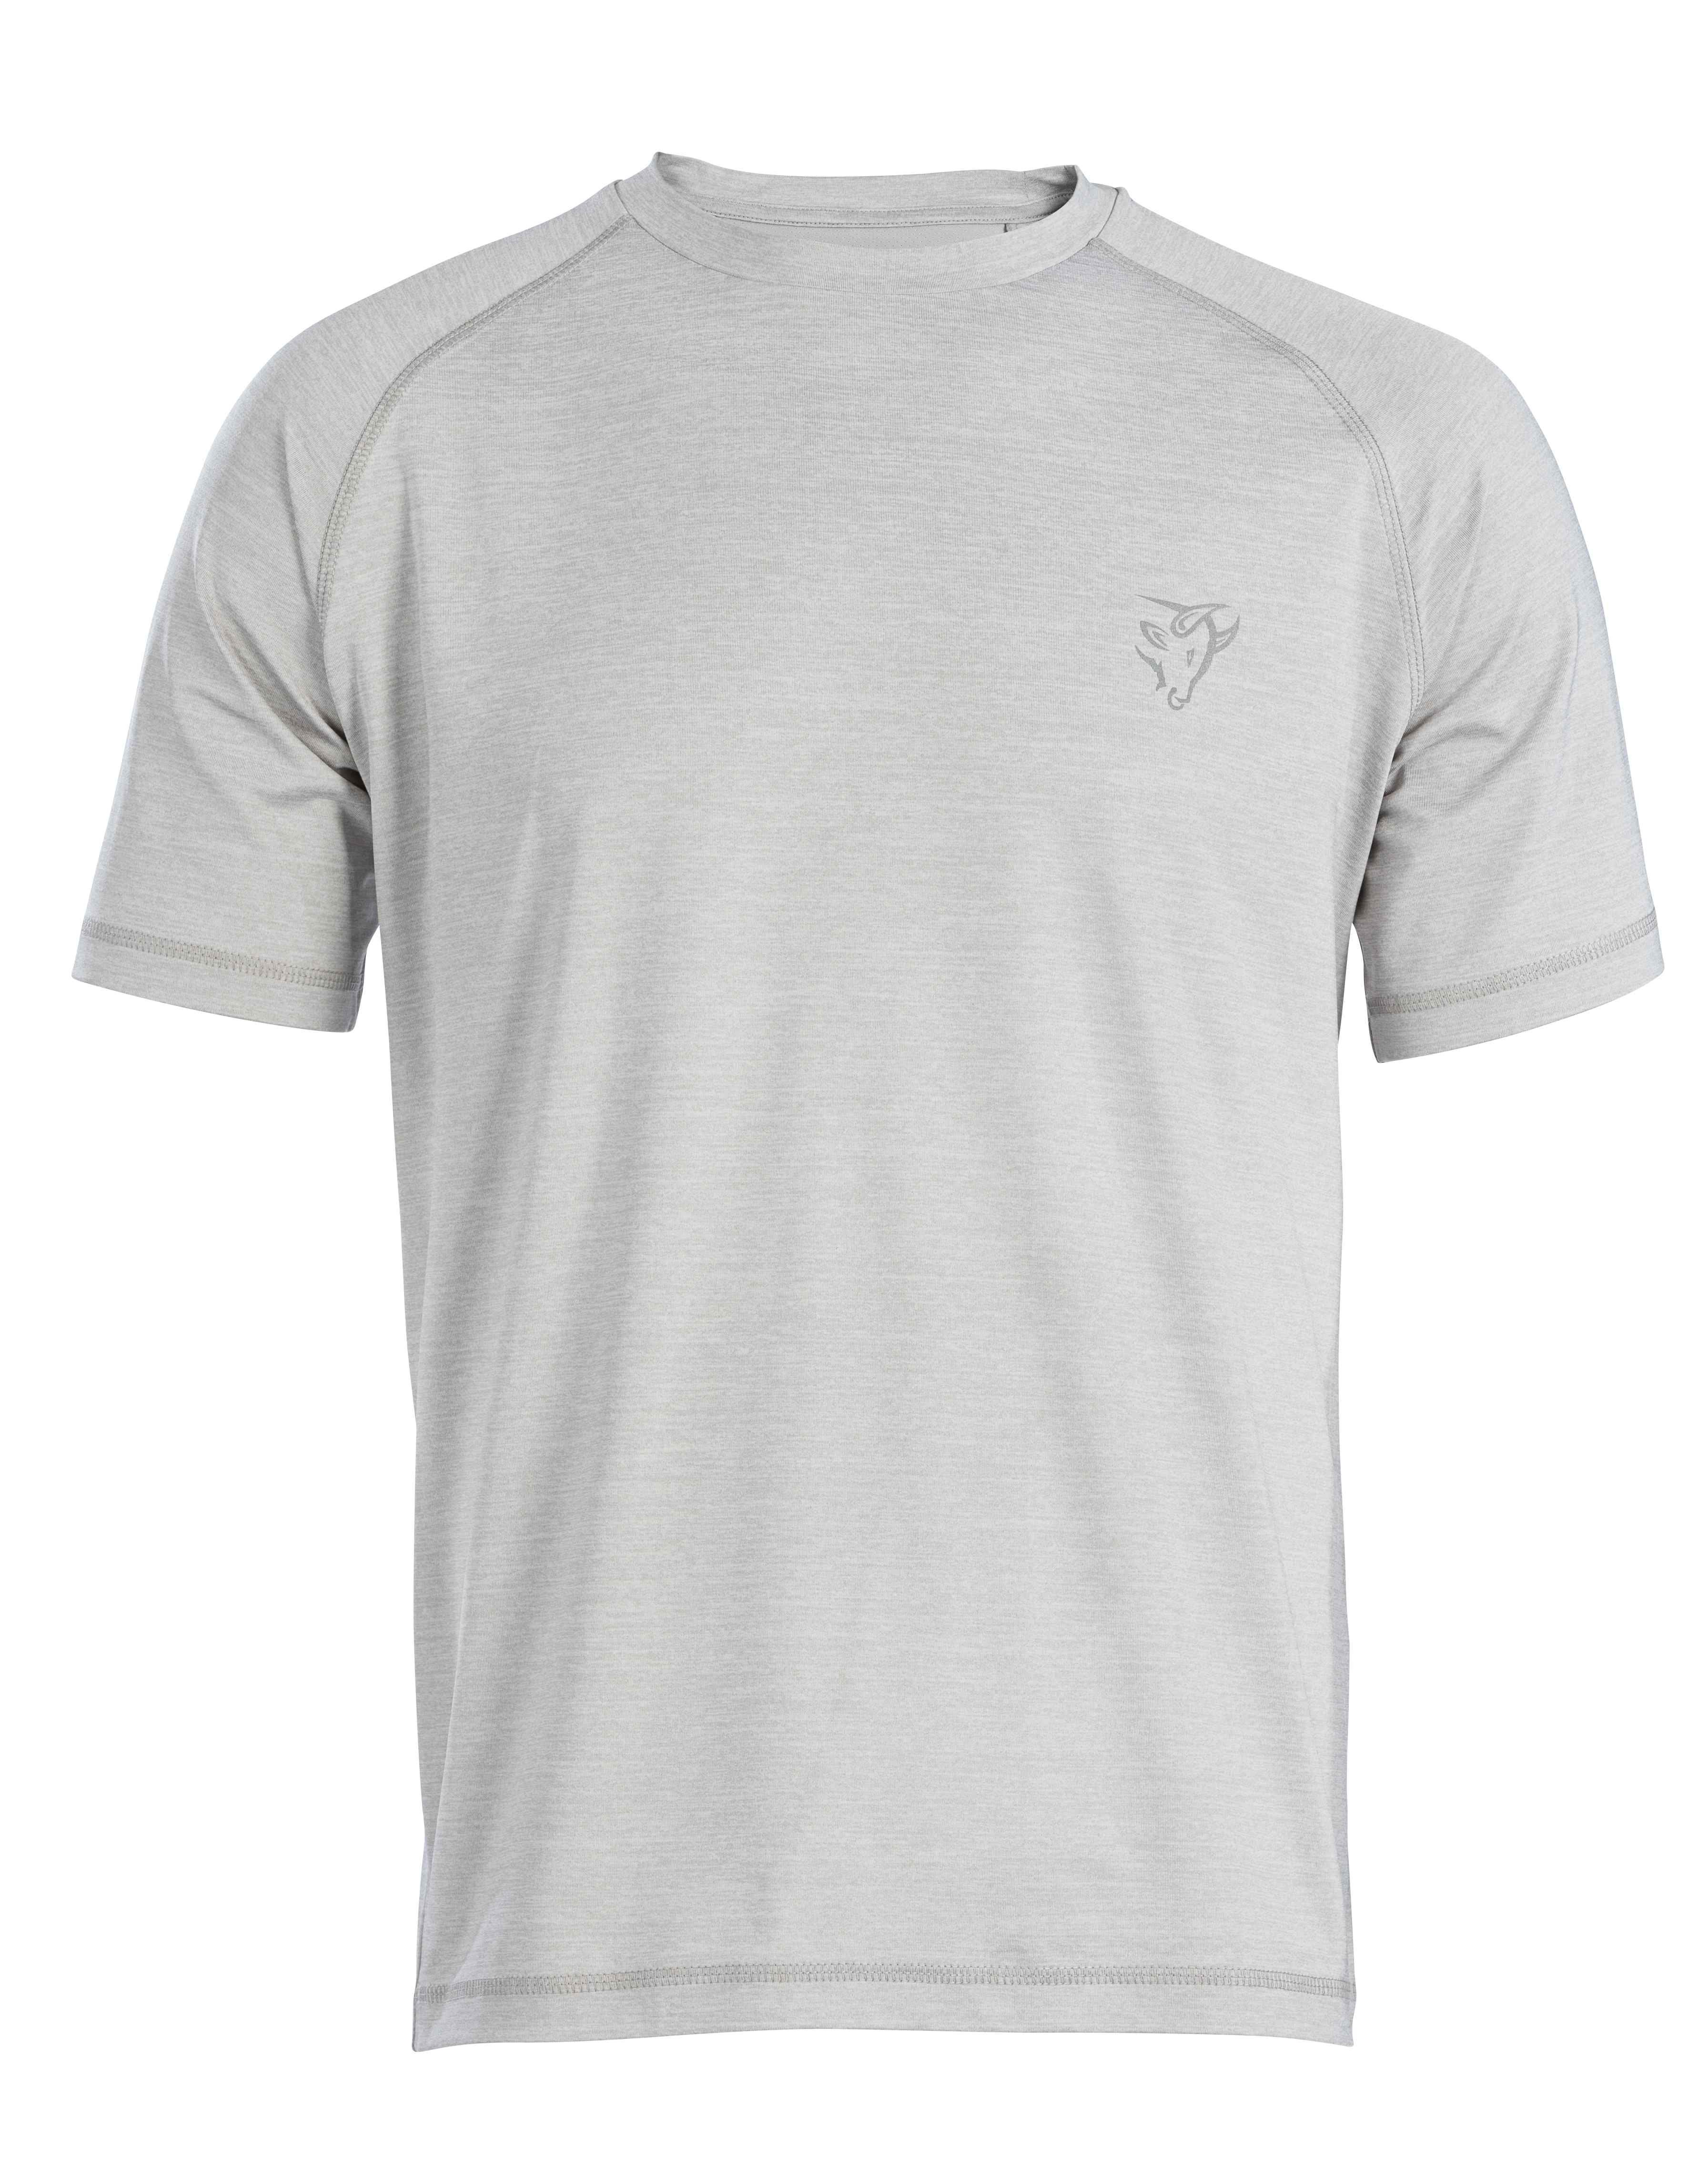 OX Tech Crew T-Shirt Grey - L